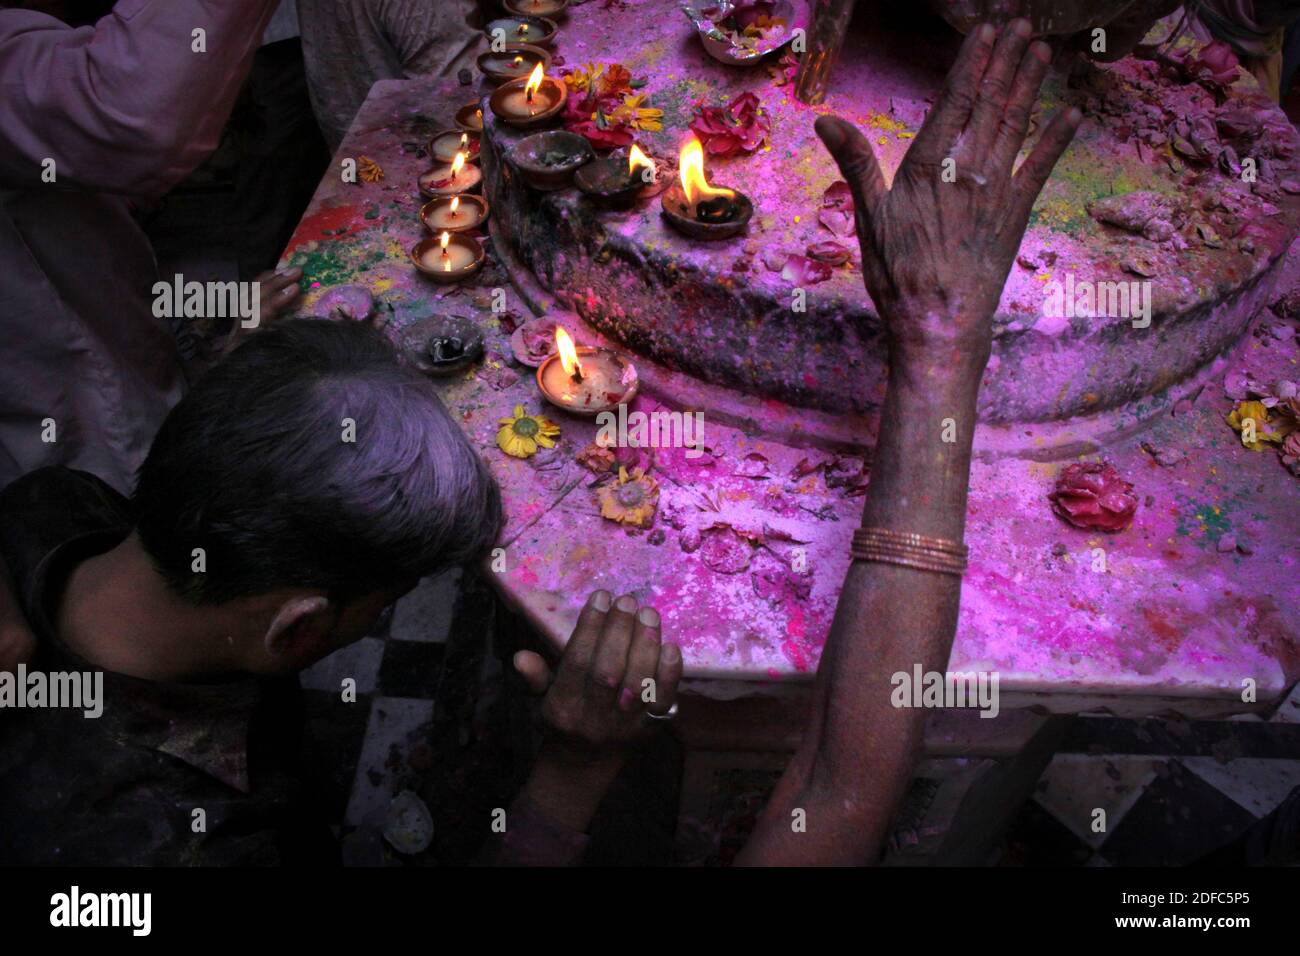 India, Uttar Pradesh, Vrindavan, Holi celebrations at banke Bihari temple worshipping Lord Krishna Stock Photo